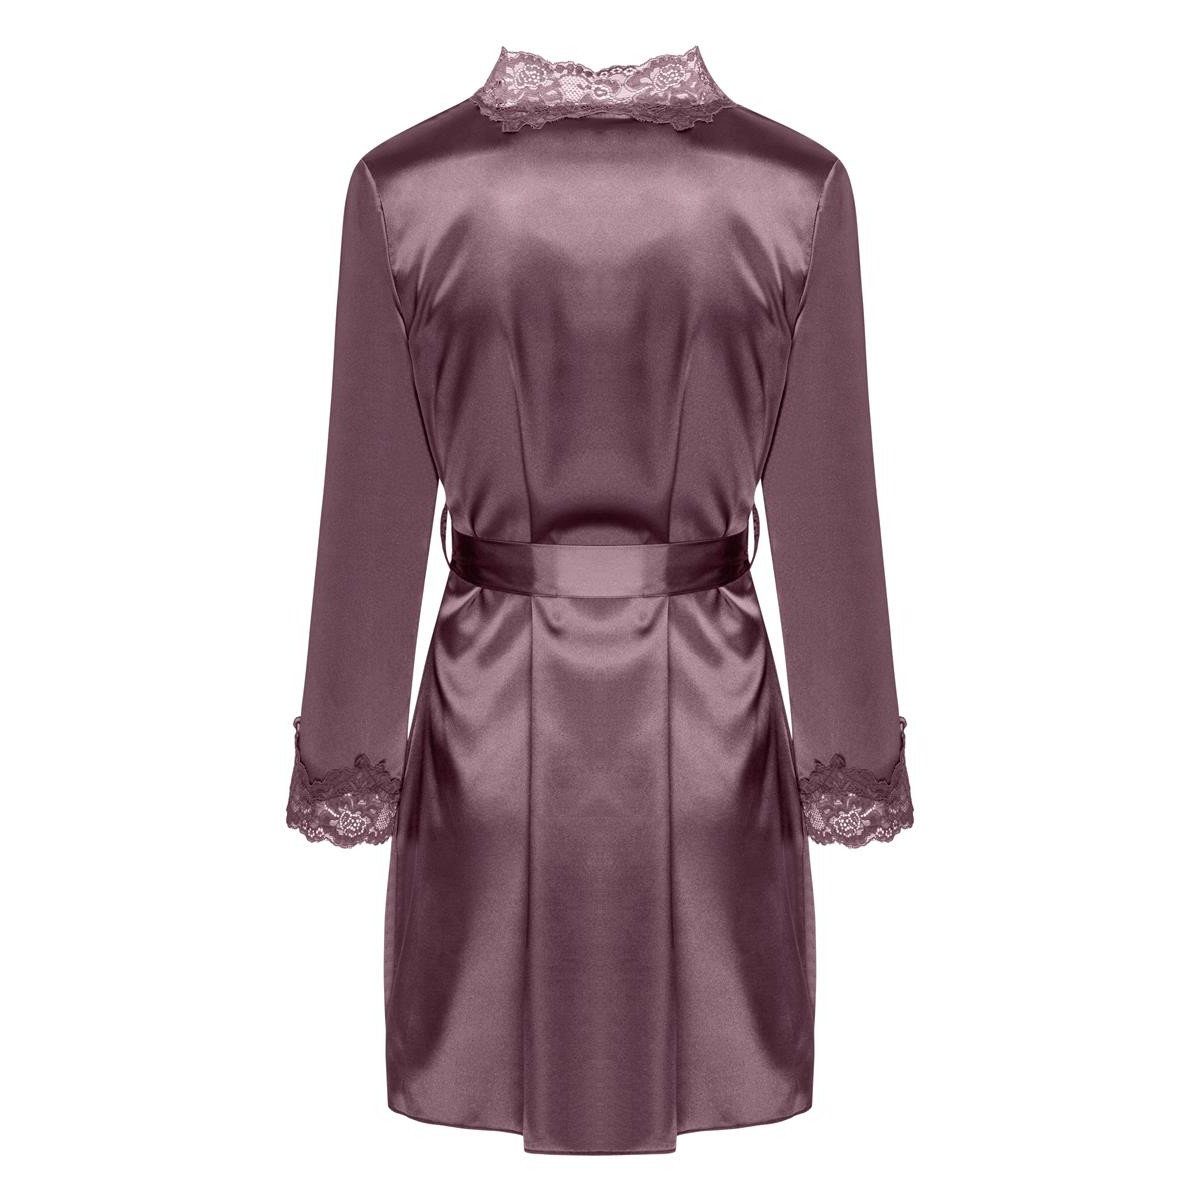 Livco - Jacqueline chemise/peignoir (L/XL,S/M) LC Fashion Nachthemd Corsetti violett